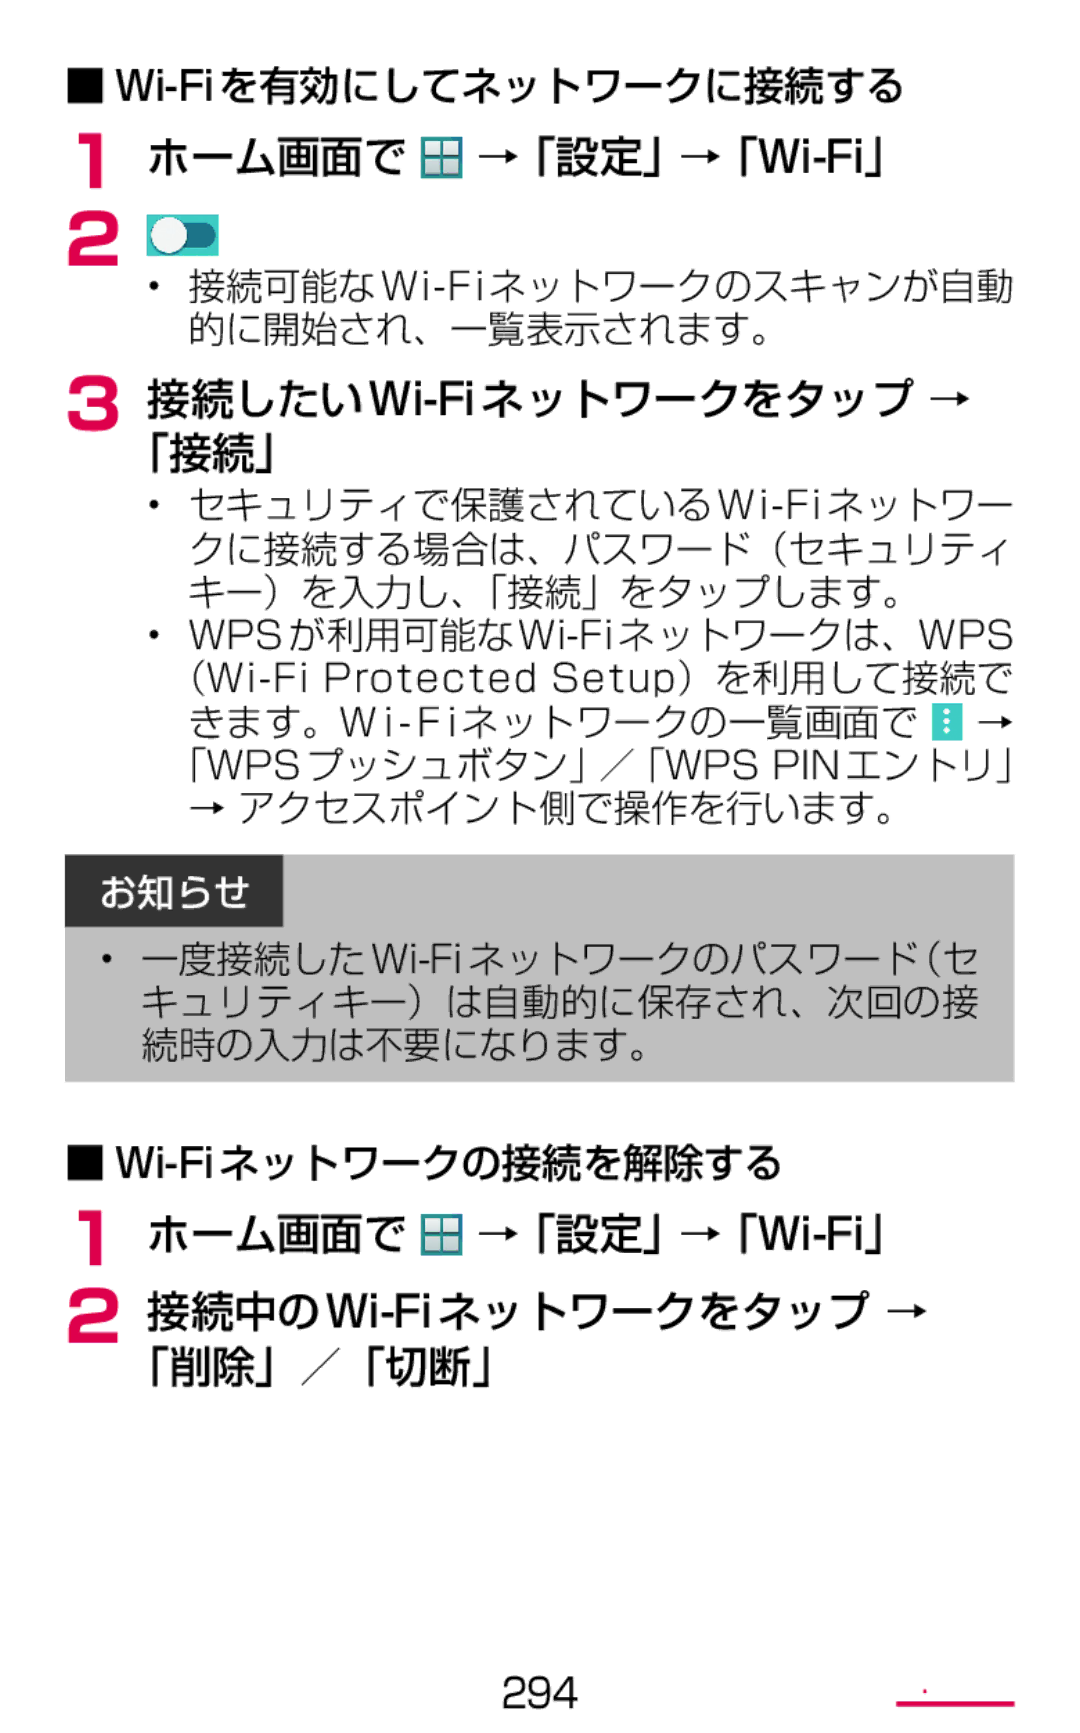 Samsung SM-G900DZKEDCM, SM-G900DZWEDCM manual ホーム画面で →「設定」→「Wi-Fi」, 「接続」接続したいWi-Fiネットワークをタップ →, Wi-Fiを有効にしてネットワークに接続する 